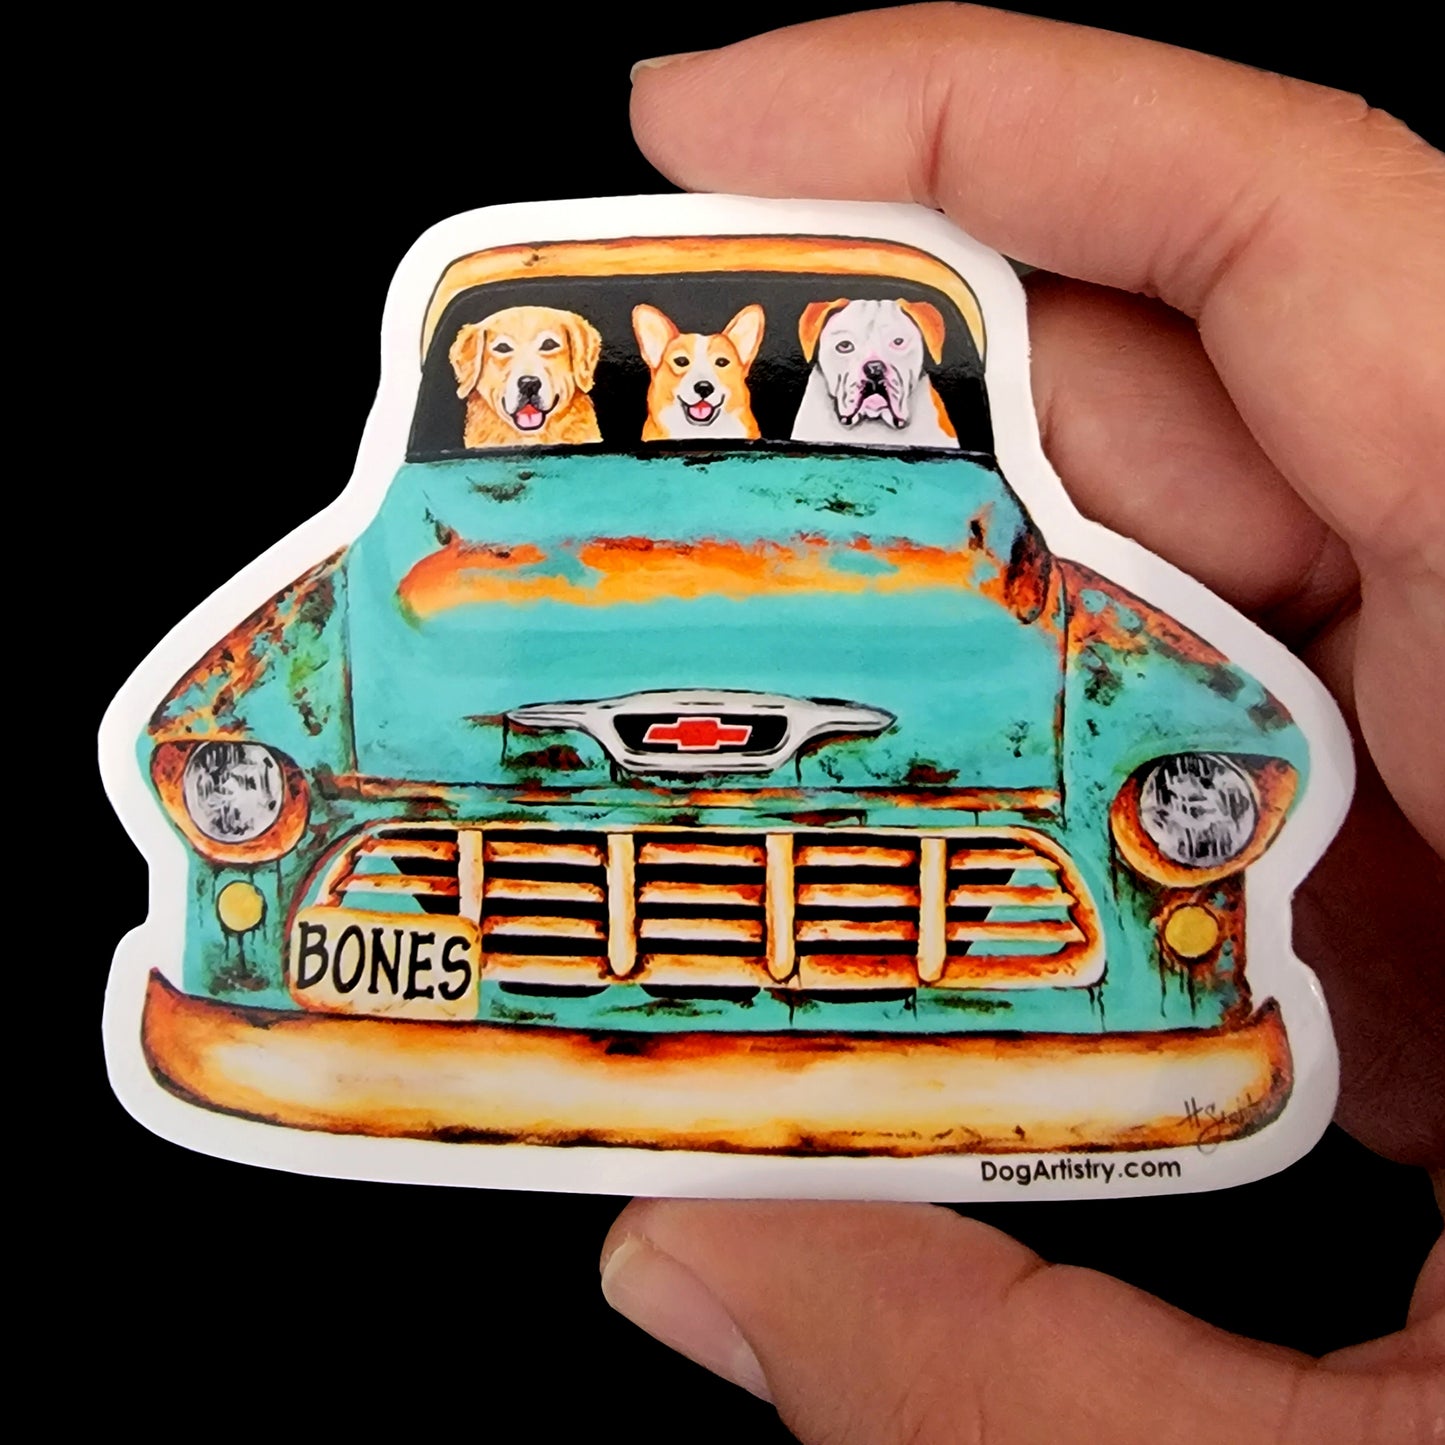 Dog Artistry Die-Cut Vinyl Sticker of a 55 Chevy Truck with Golden Retriever, Corgi, and American Bulldog